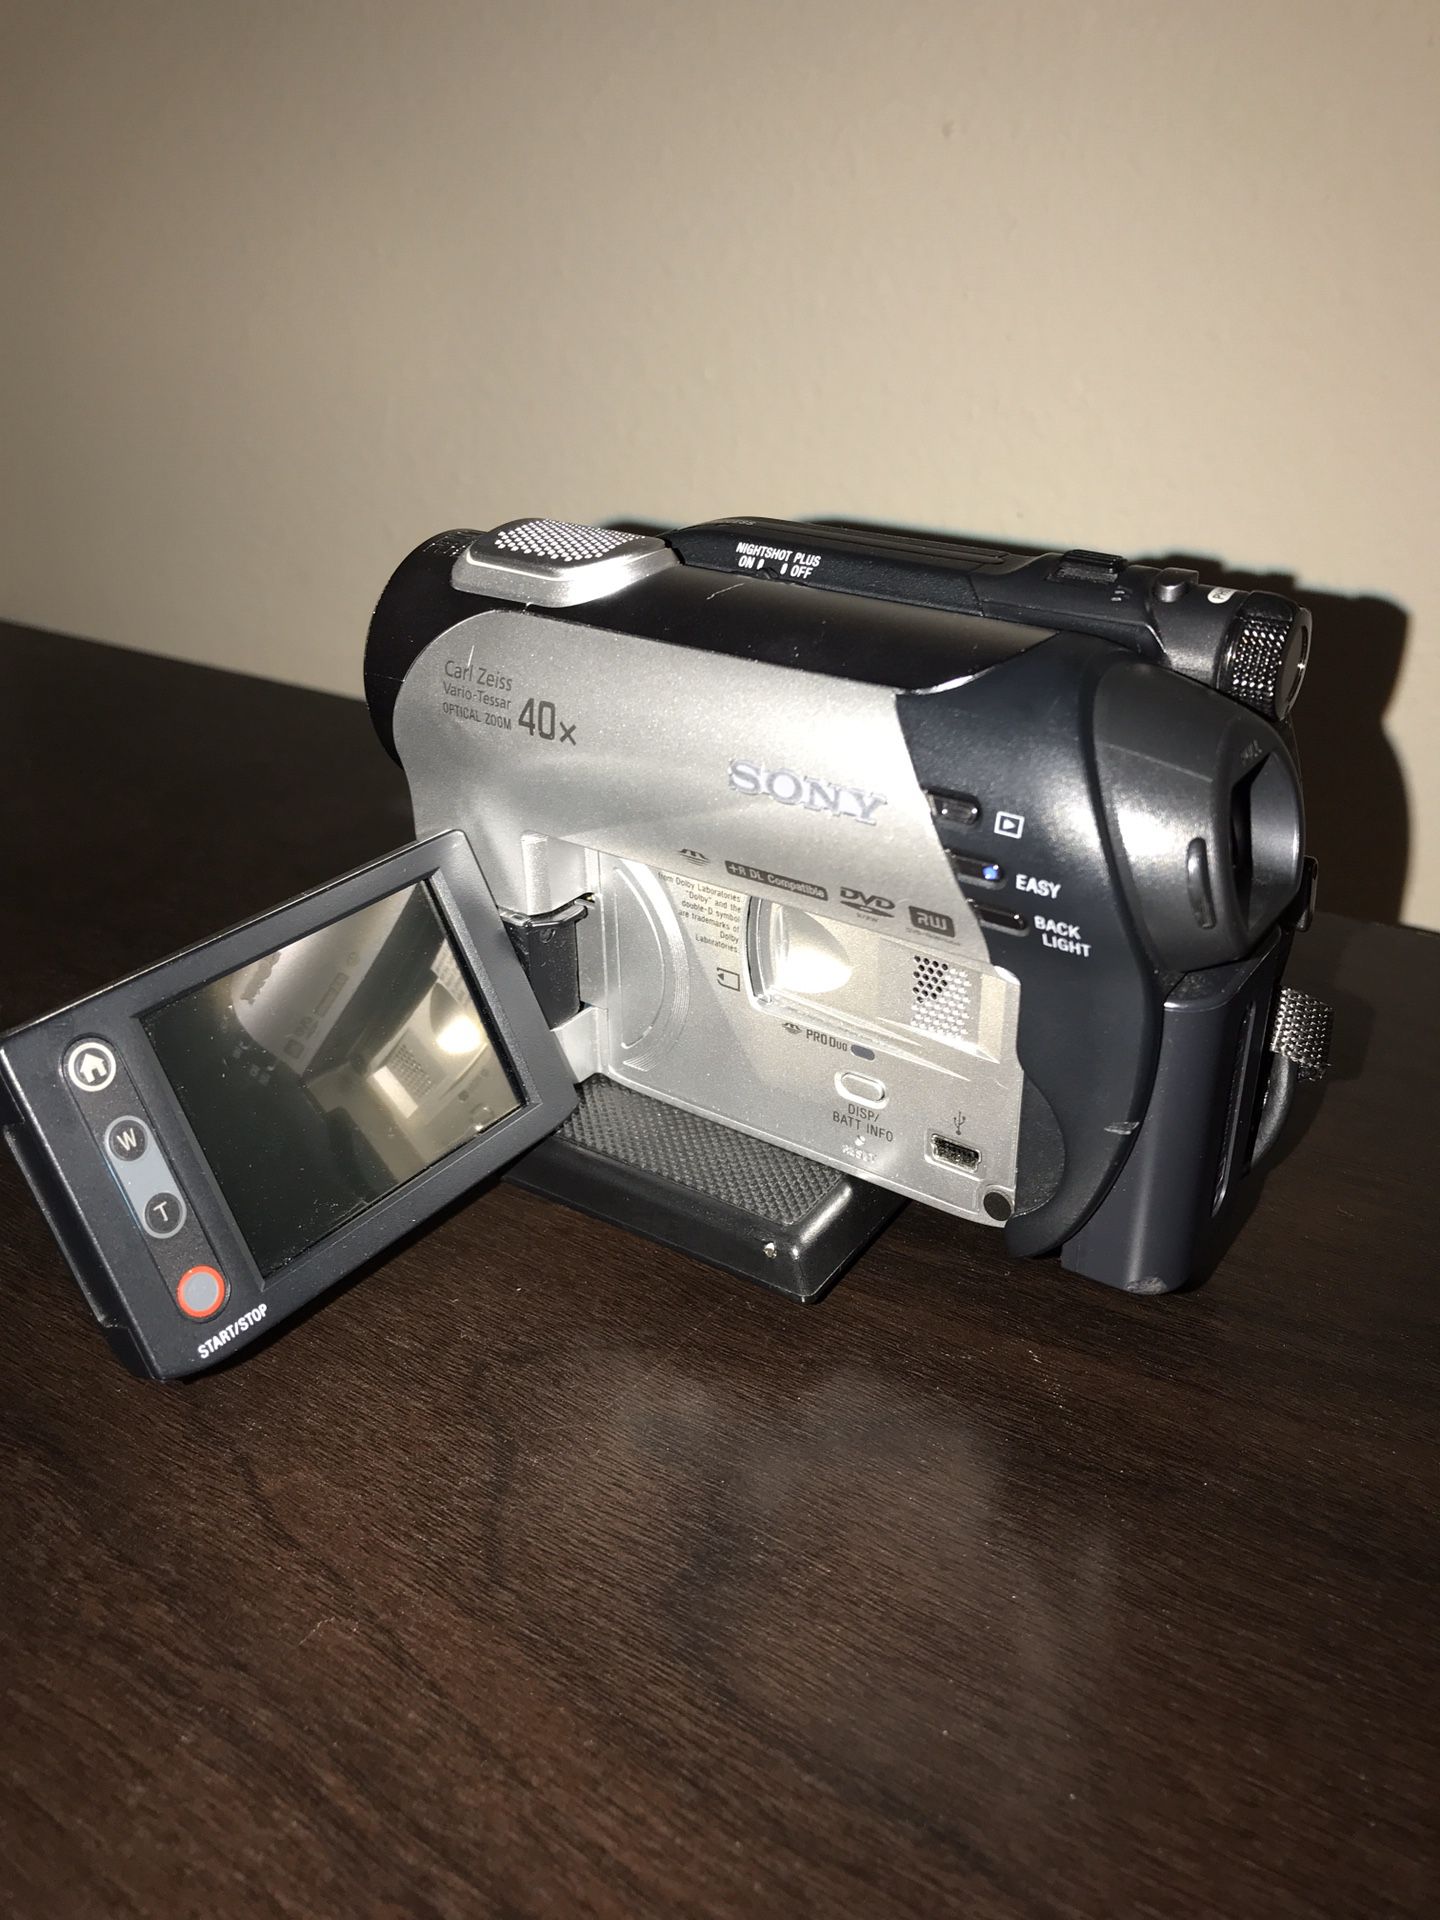 Sony Handycam 40X Zoom Digital Camcorder